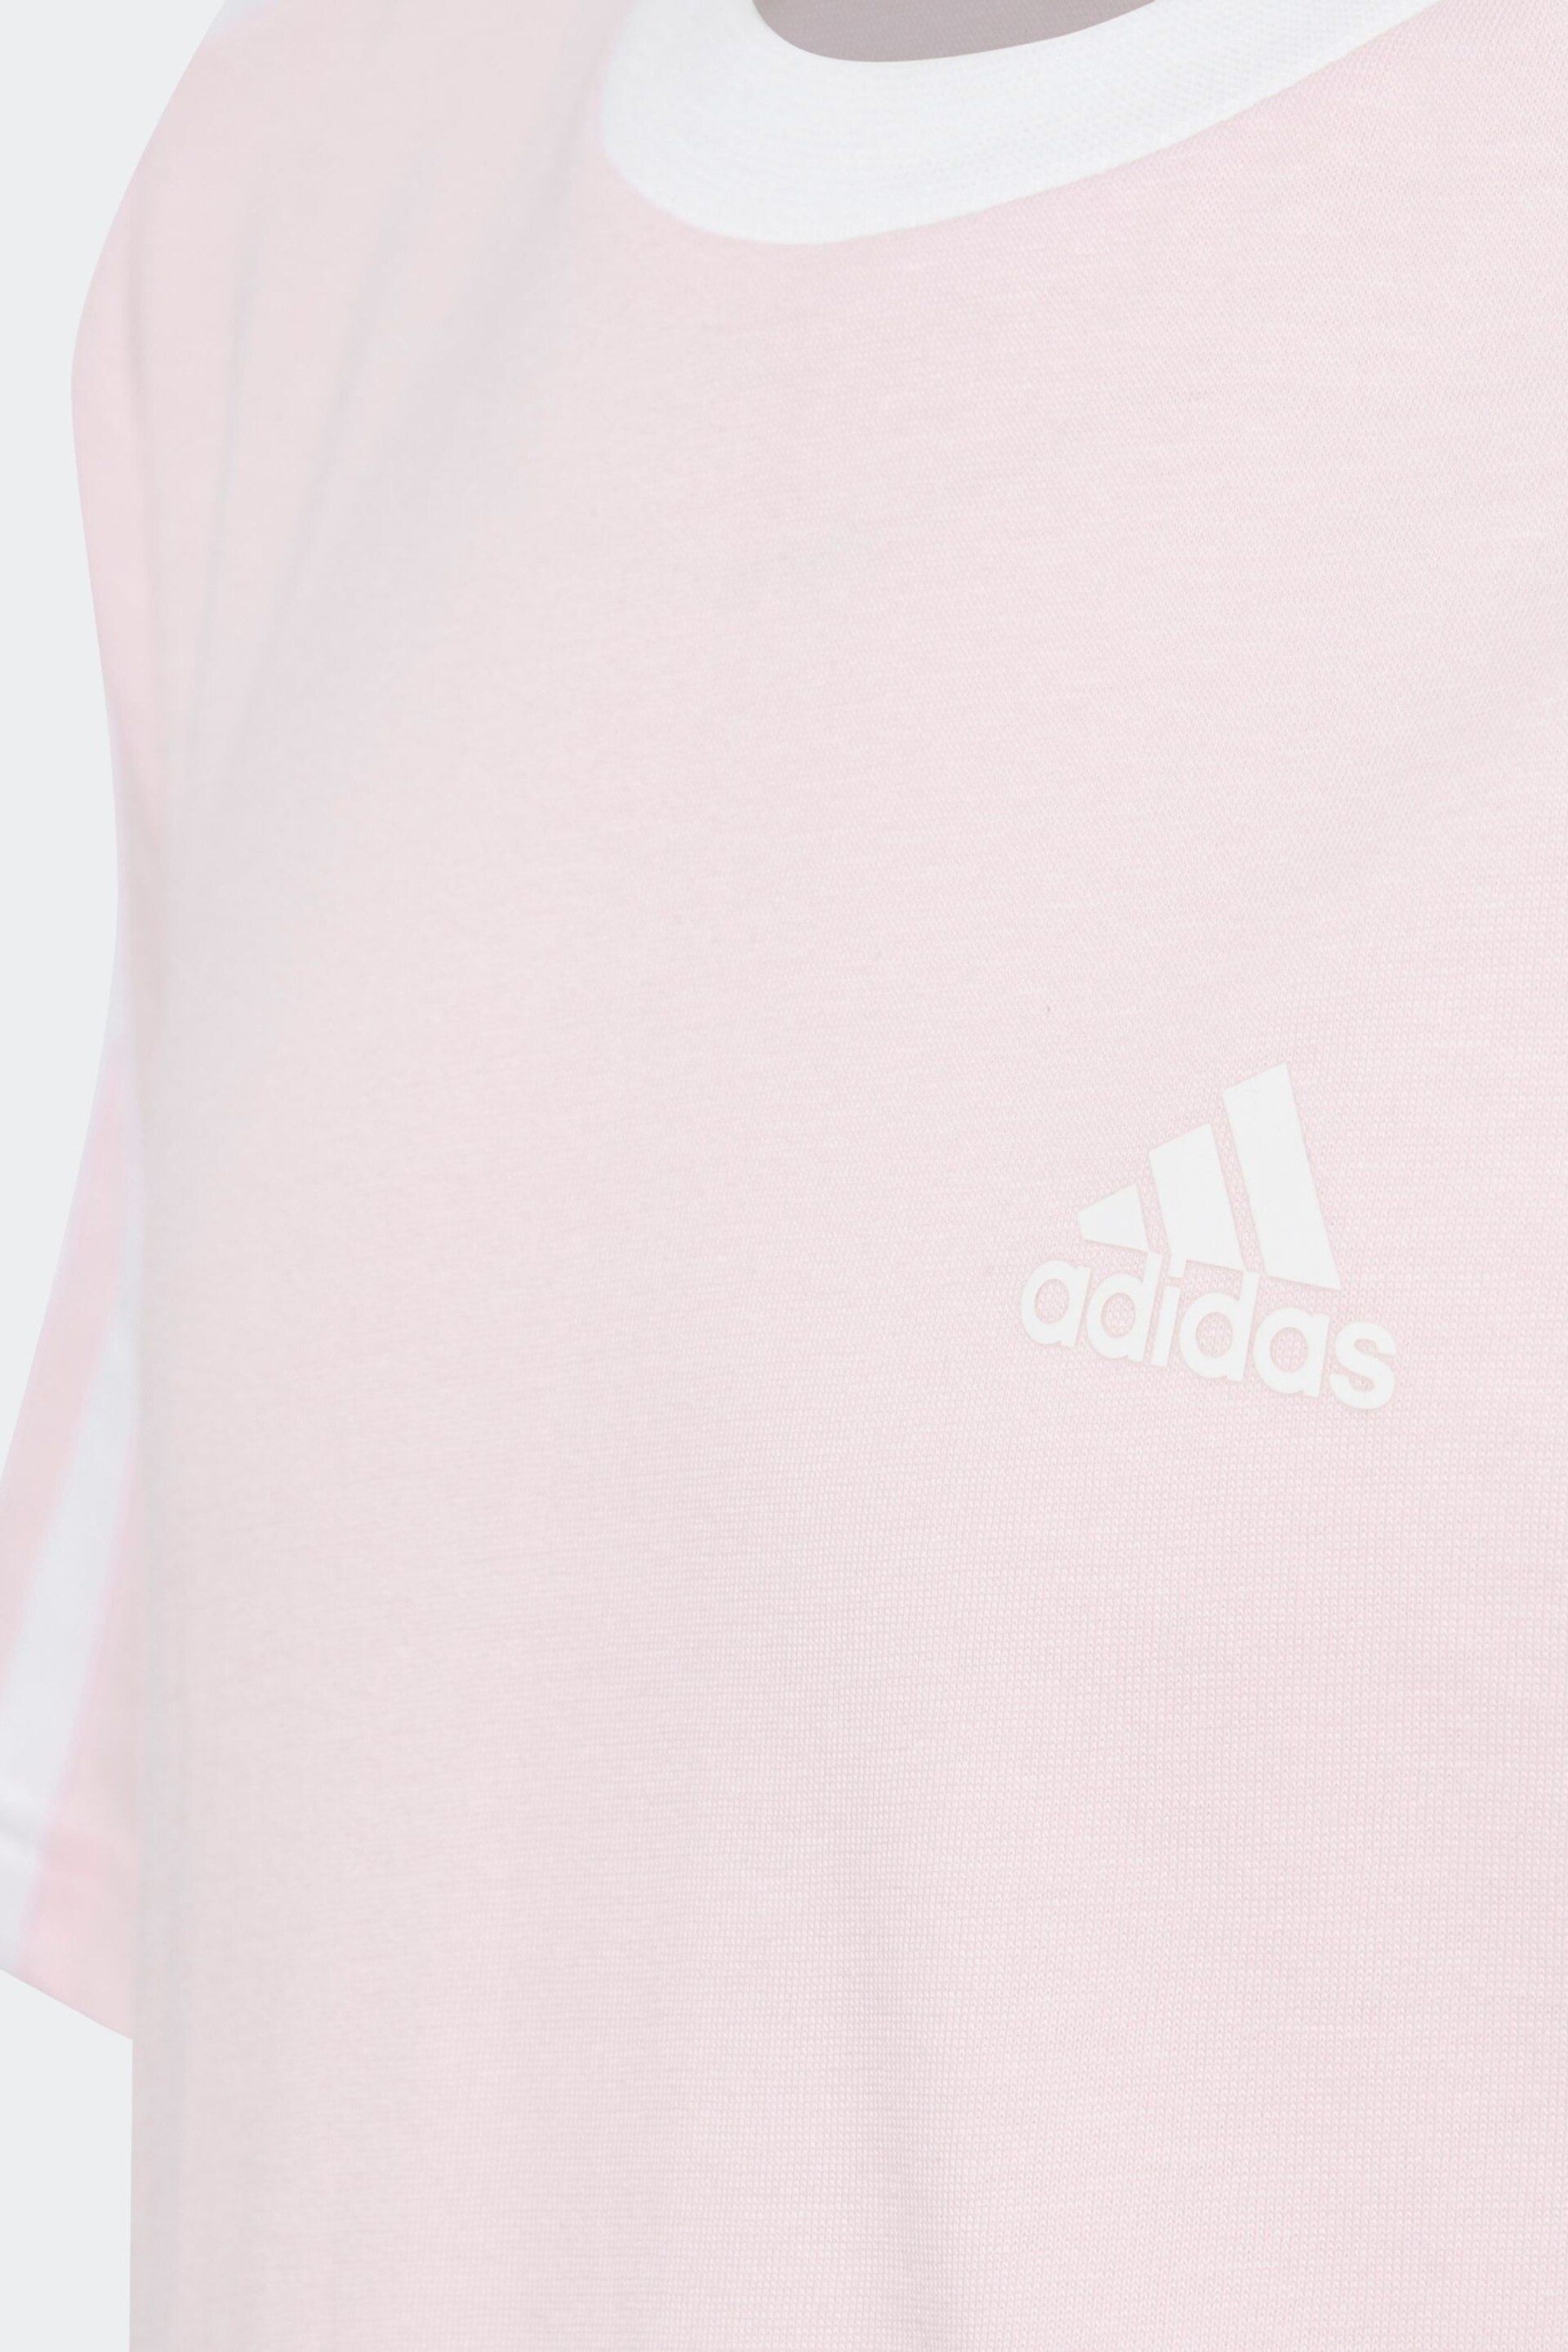 adidas Pink 3-Stripe Essential Boyfriend Fit T-Shirt - Image 13 of 15